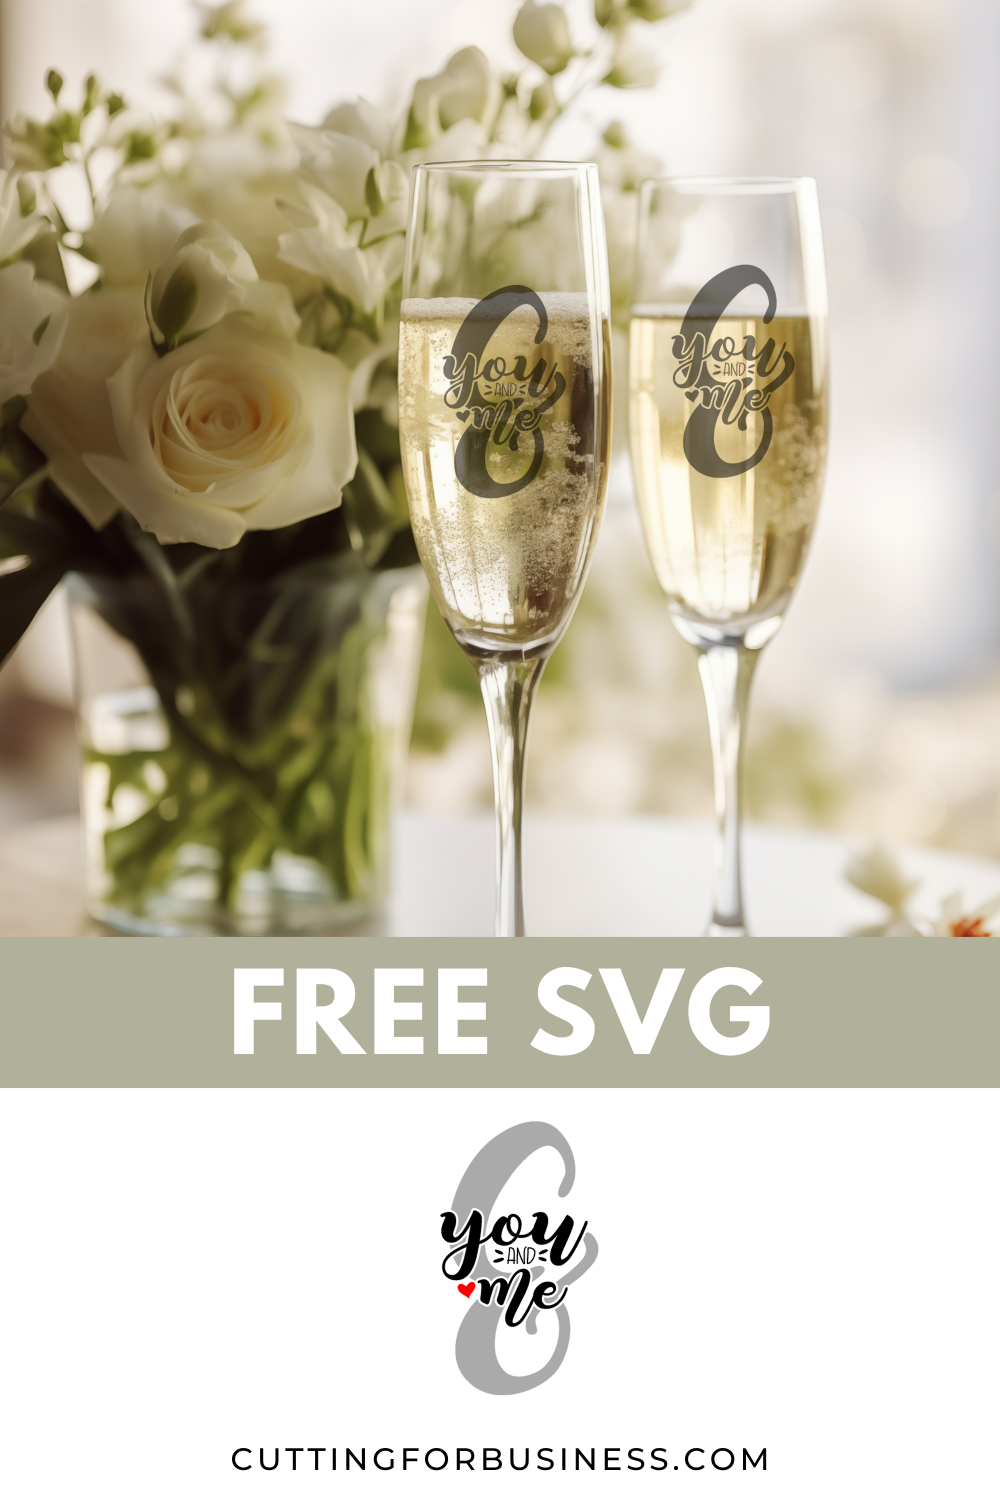 Free Wedding SVG - You & Me - cuttingforbusiness.com